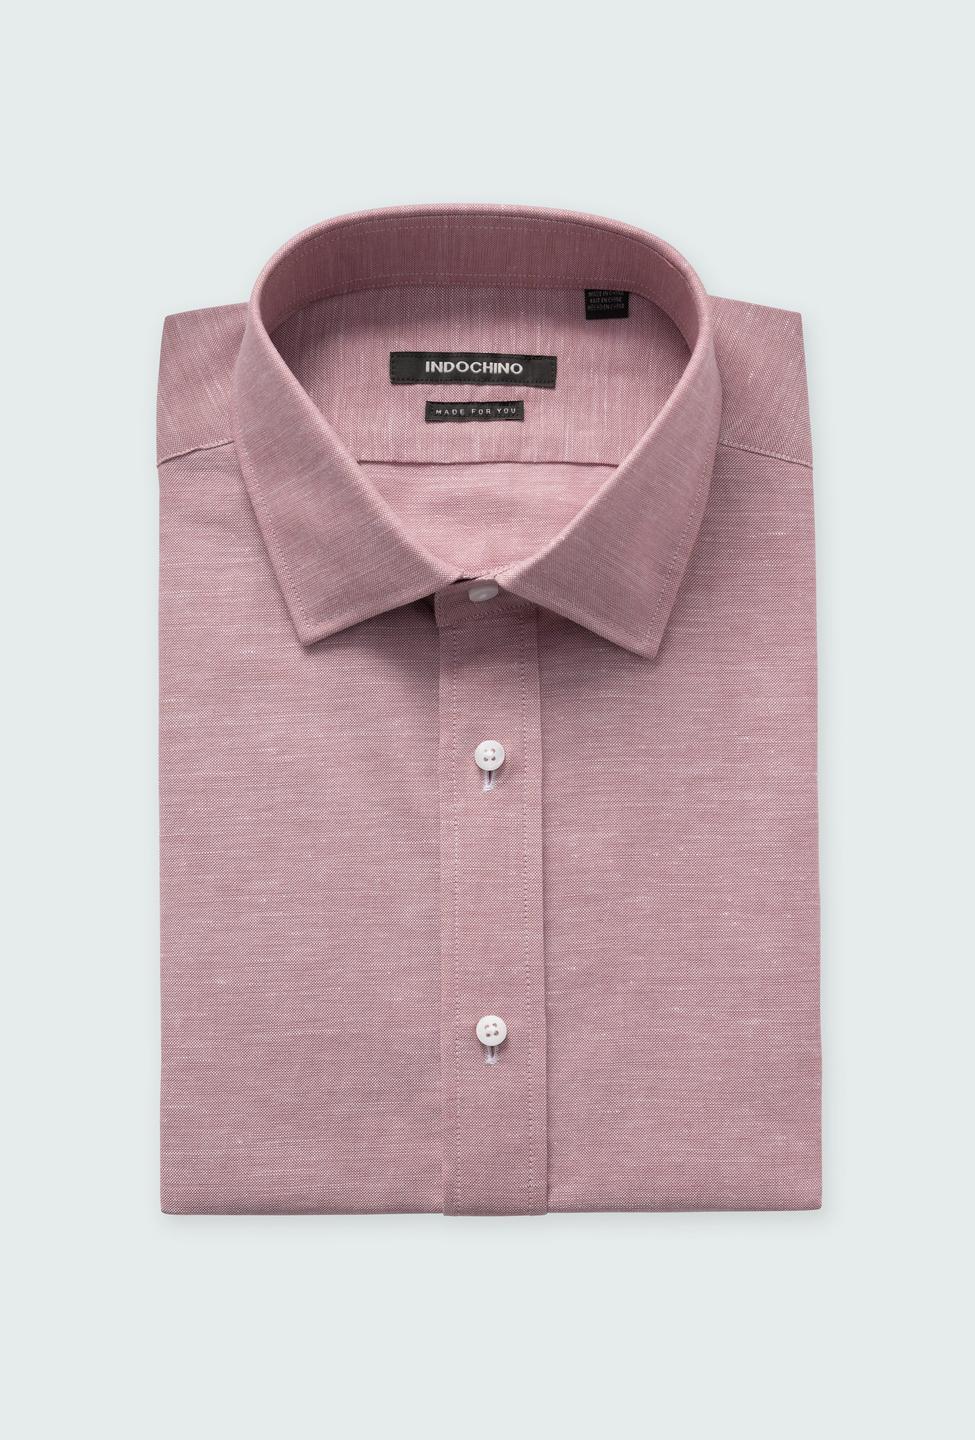 Sudbury Cotton Linen Rose Shirt